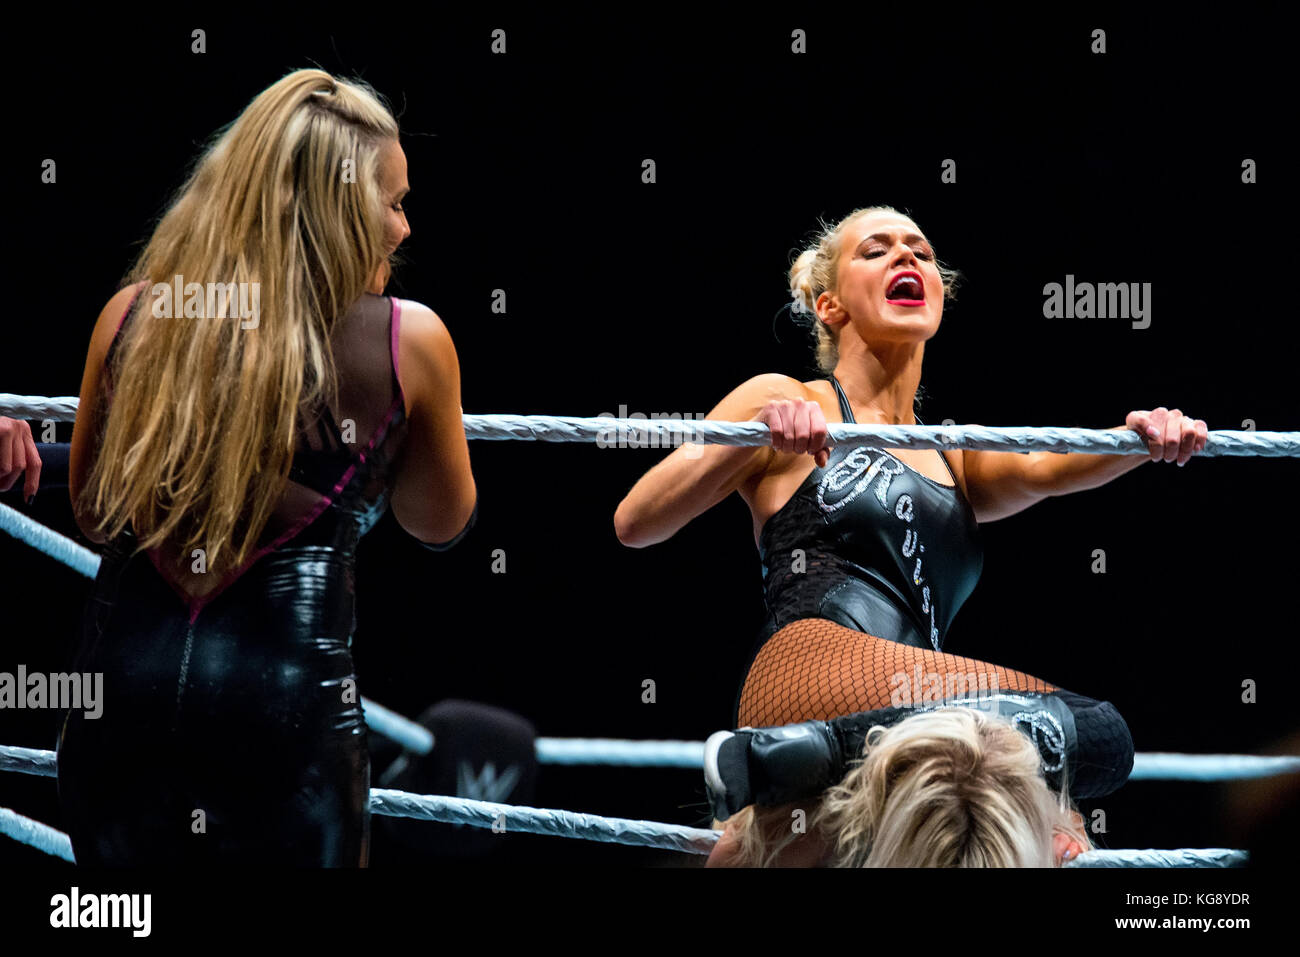 BARCELONA - NOV 4: The wrestler Charlotte Flair in action at WWE Live at the Palau Sant Jordi on November 4, 2017 in Barcelona, Spain. Stock Photo